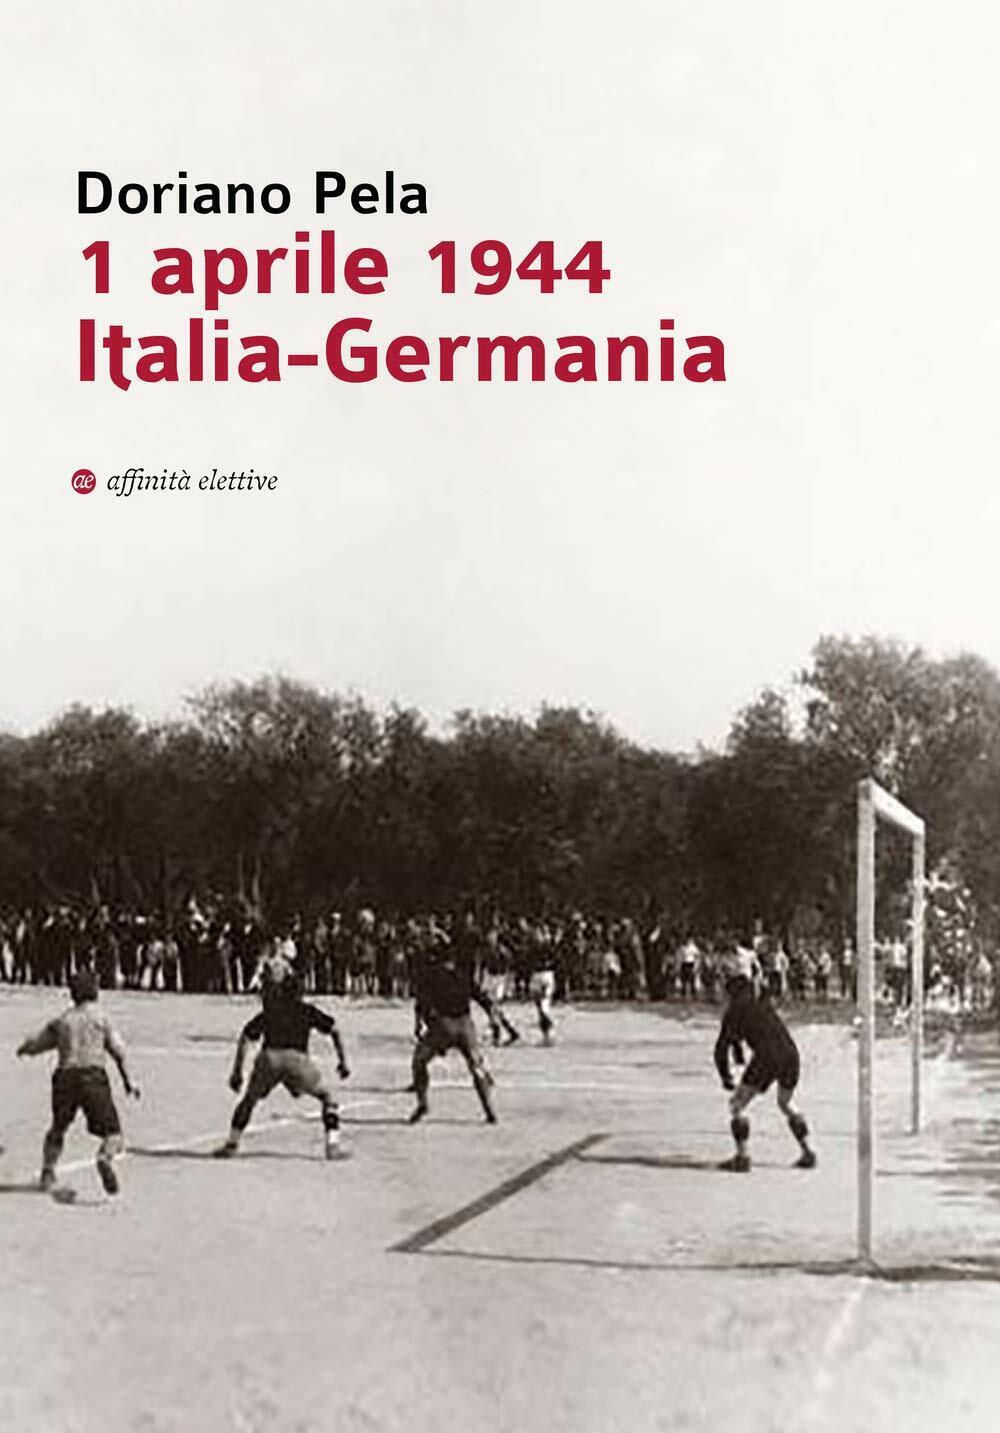 1 aprile 1944 Italia-Germania - Doriano Pela - Affinit? Elettive Edizioni, 2019